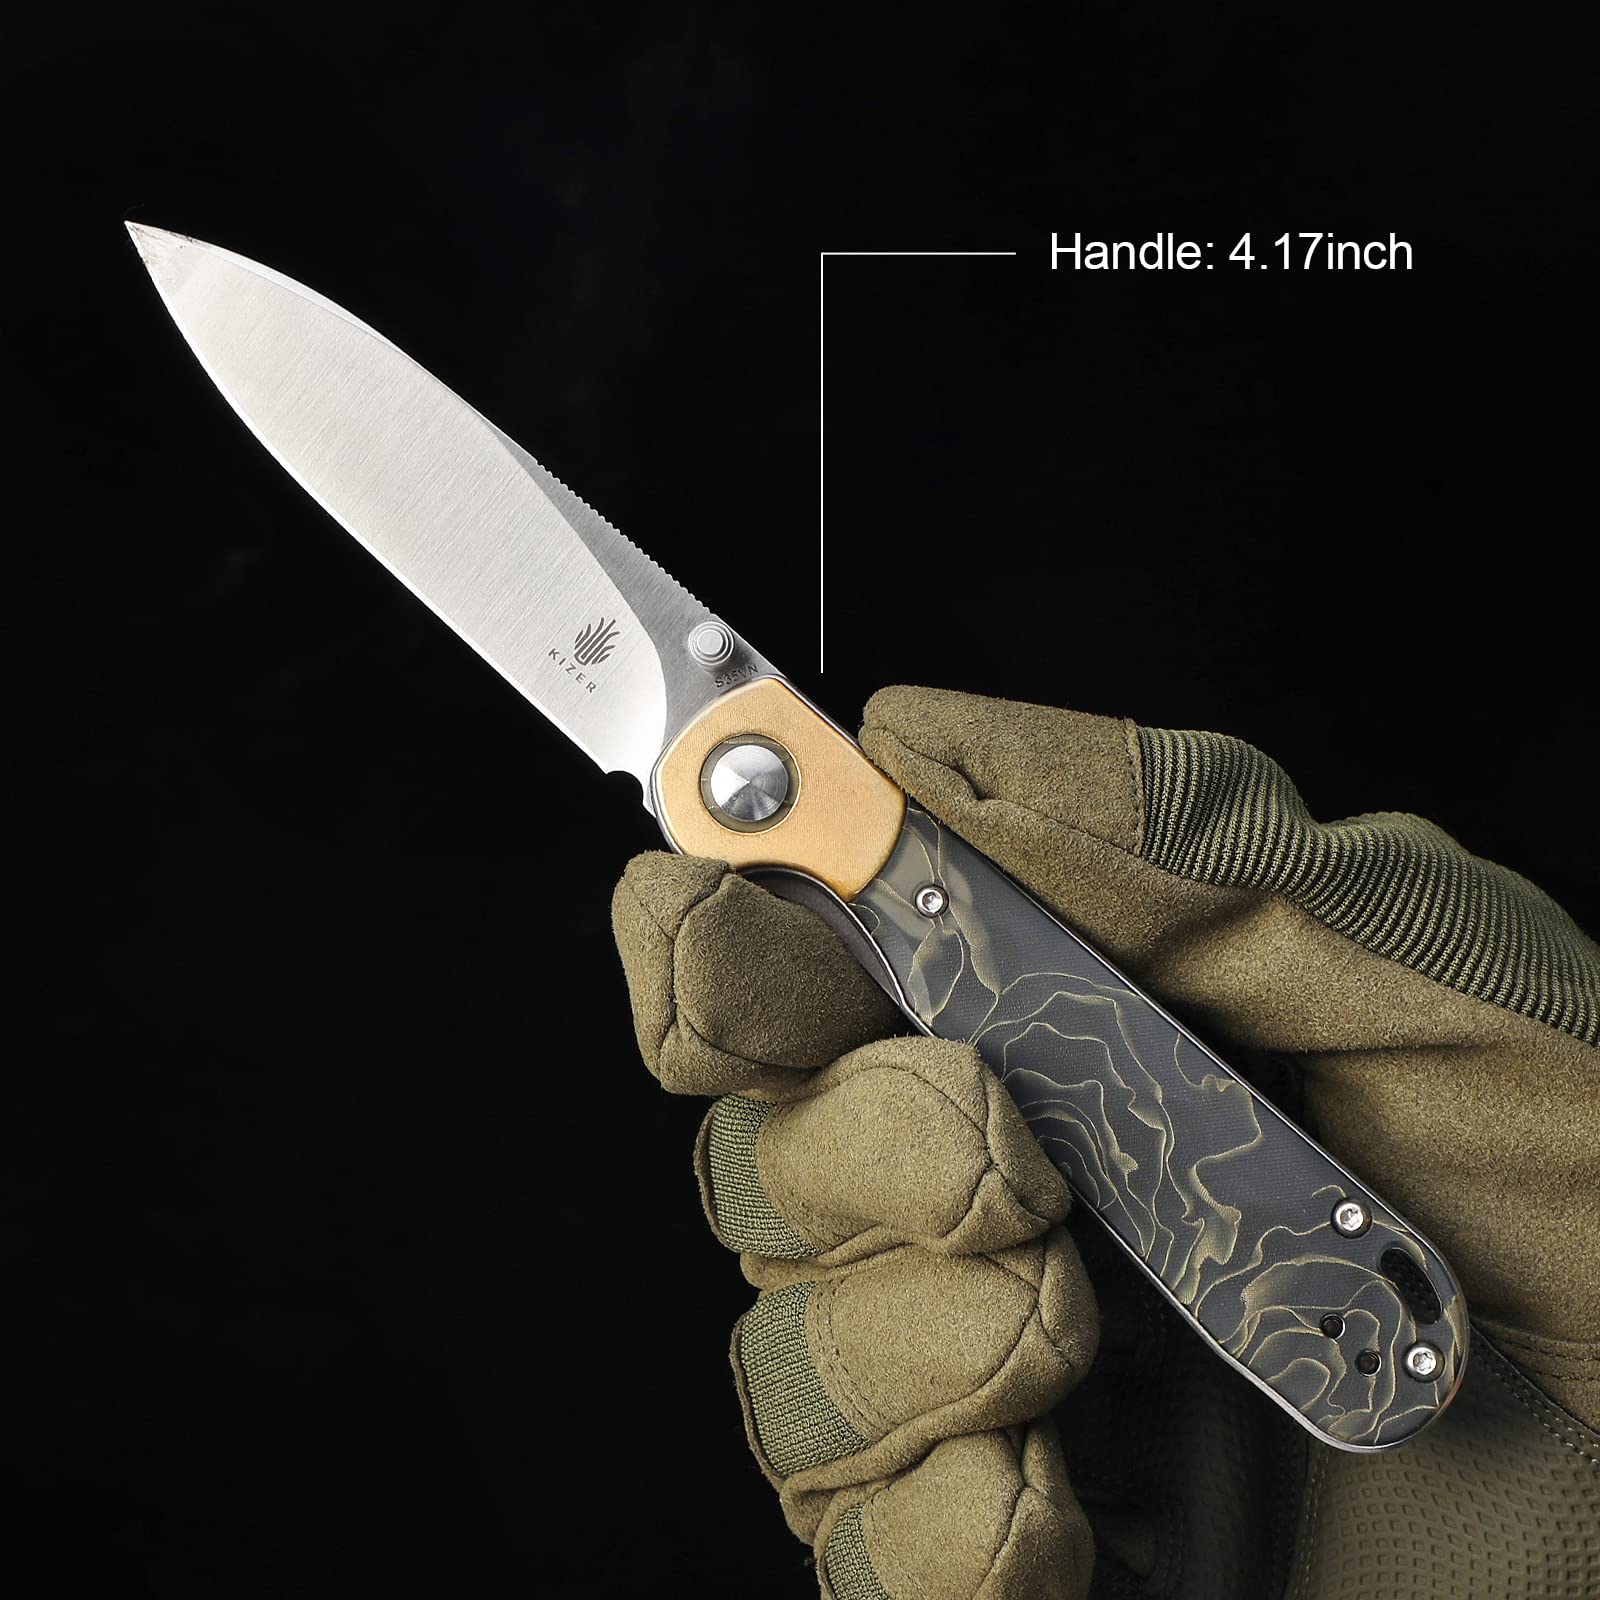 Kizer PPY EDC Knife 3.27 Inches S35VN Blade Pocket Knie Brass and Raffir Handle Folding Knives Ki3587A1